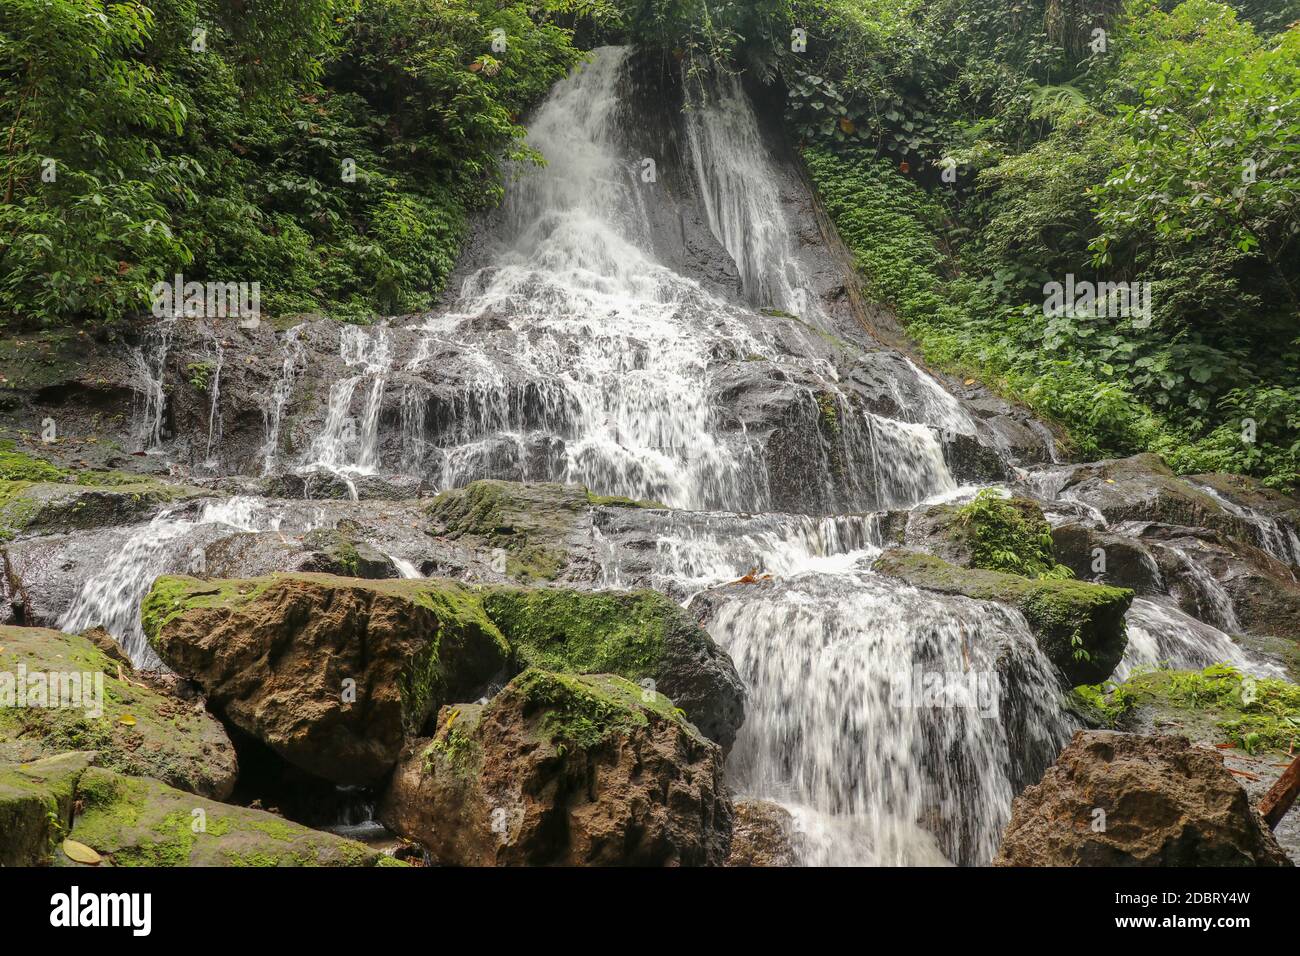 Scenic cascade Goa Giri Campuhan waterfall in tropical jungle in Bali, Indonesia. Amazing and beautiful hidden Waterfall in Paradise. Stock Photo